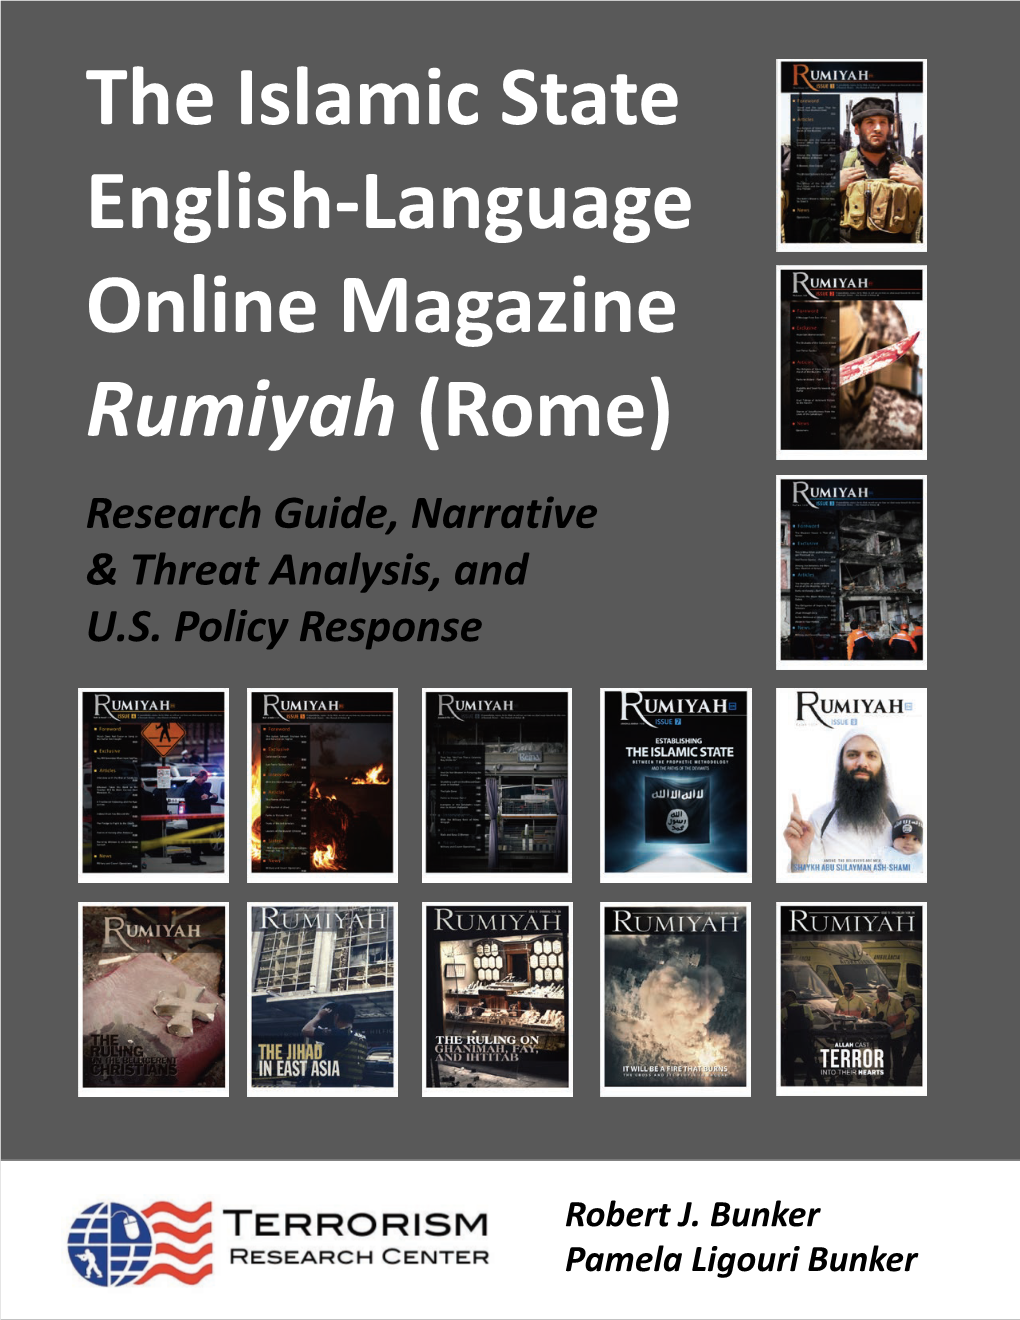 The Islamic State English-Language Online Magazine Rumiyah (Rome) Research Guide, Narrative & Threat Analysis, and U.S